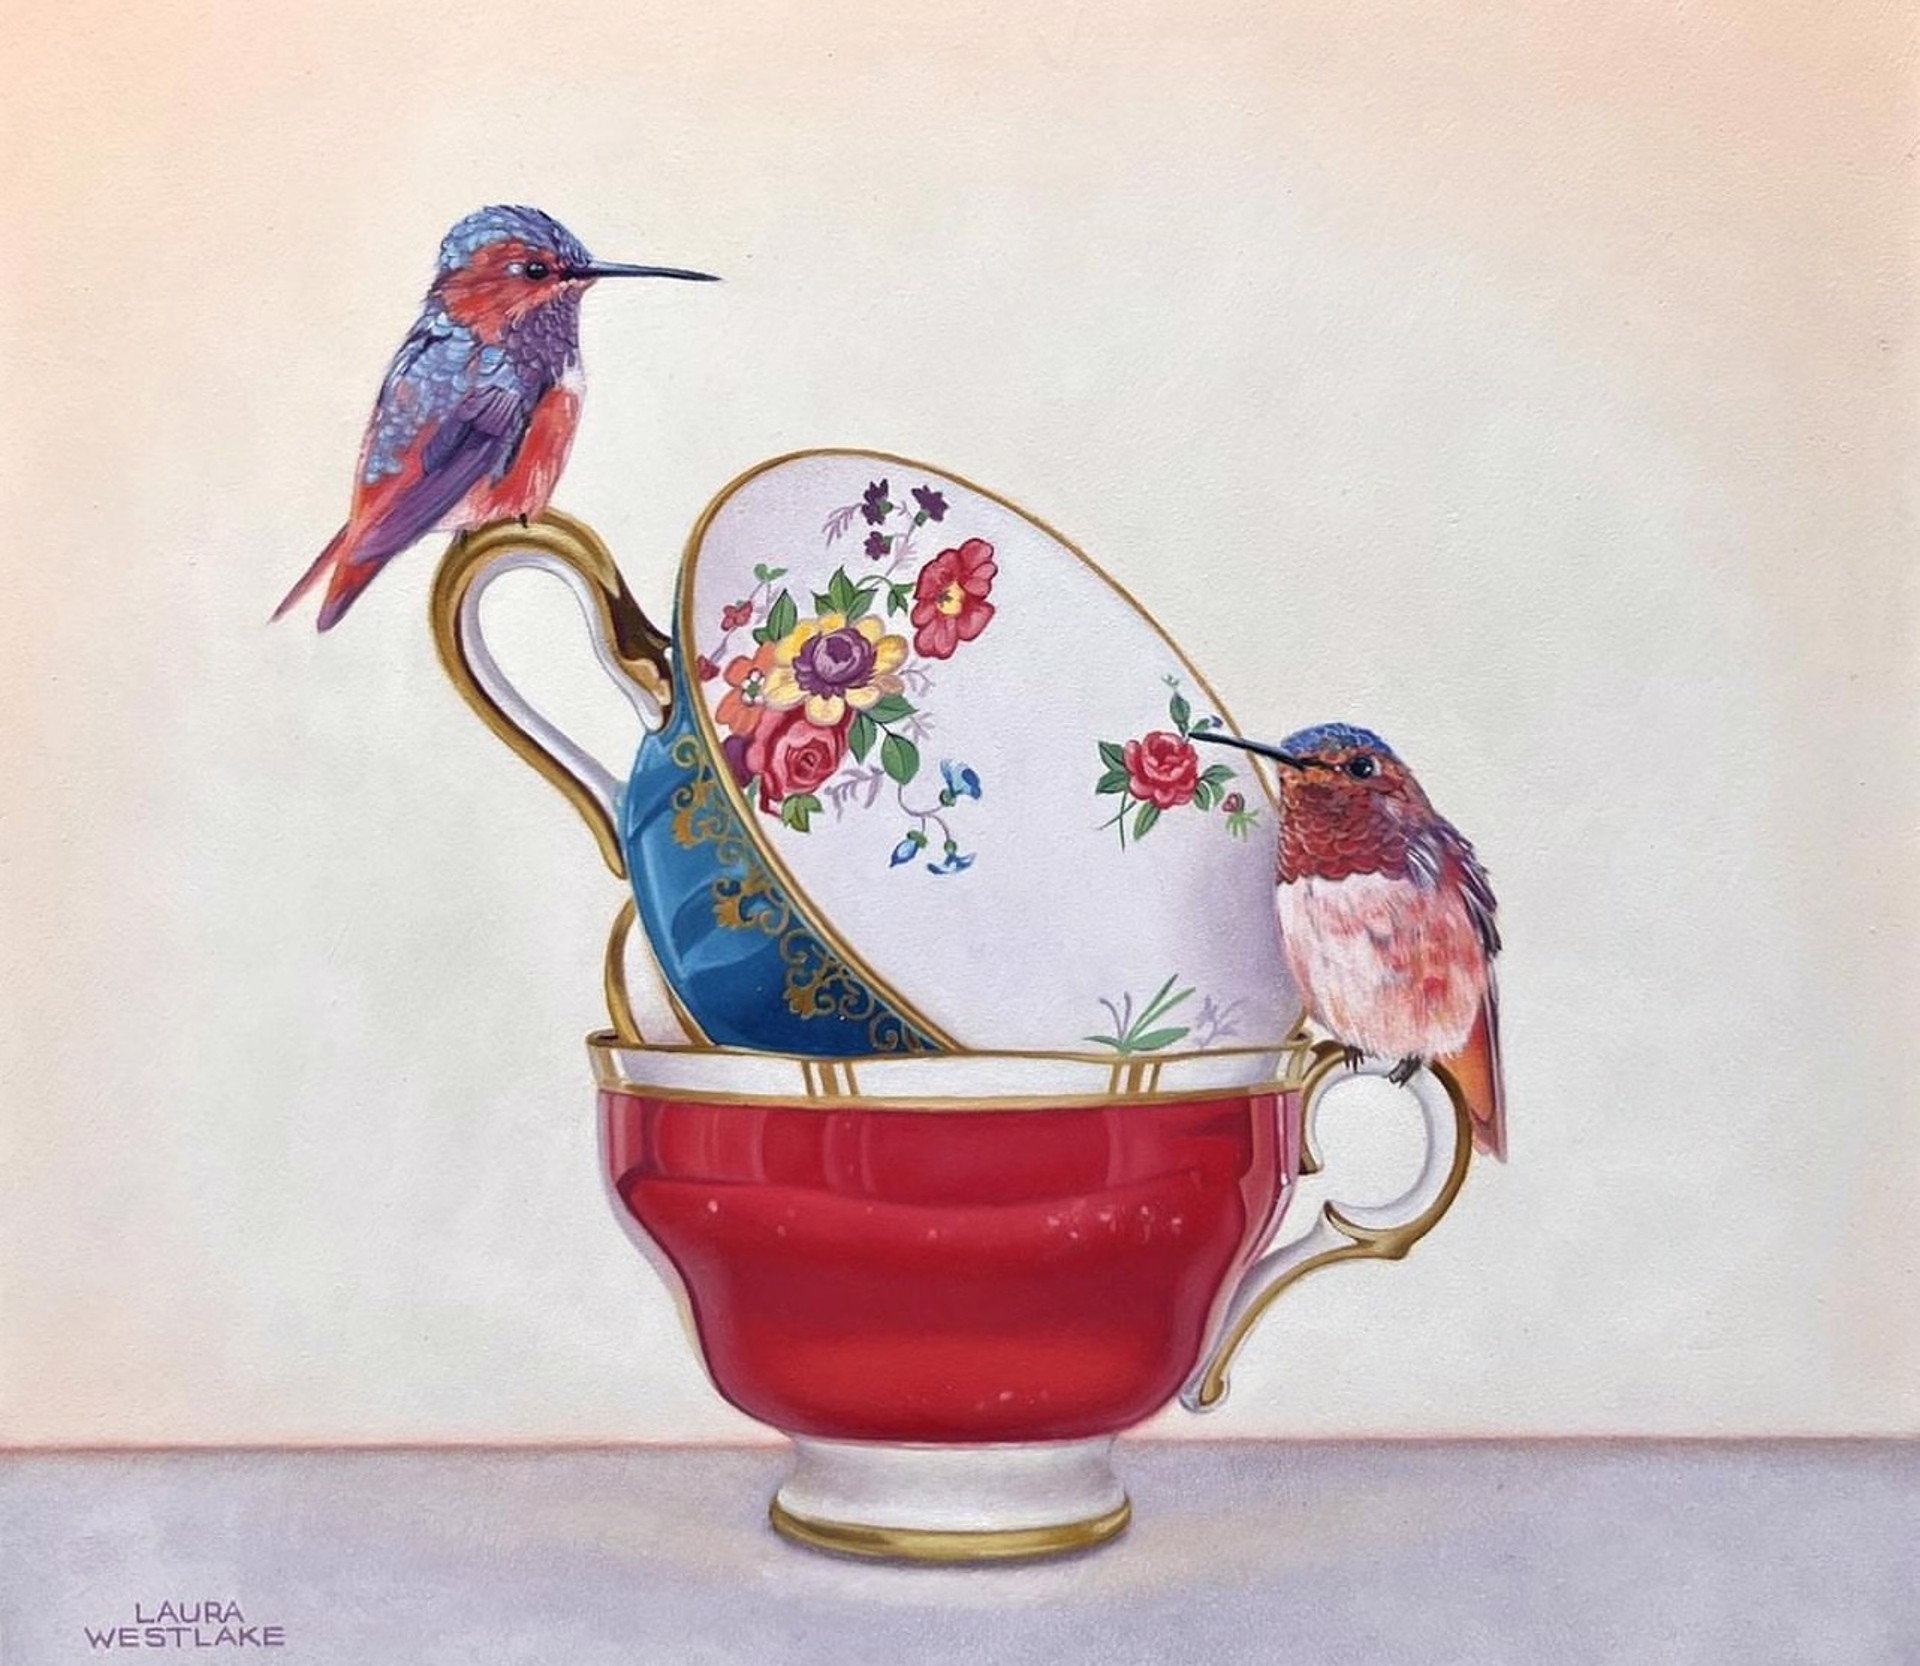 Free as a Bird by Laura Westlake